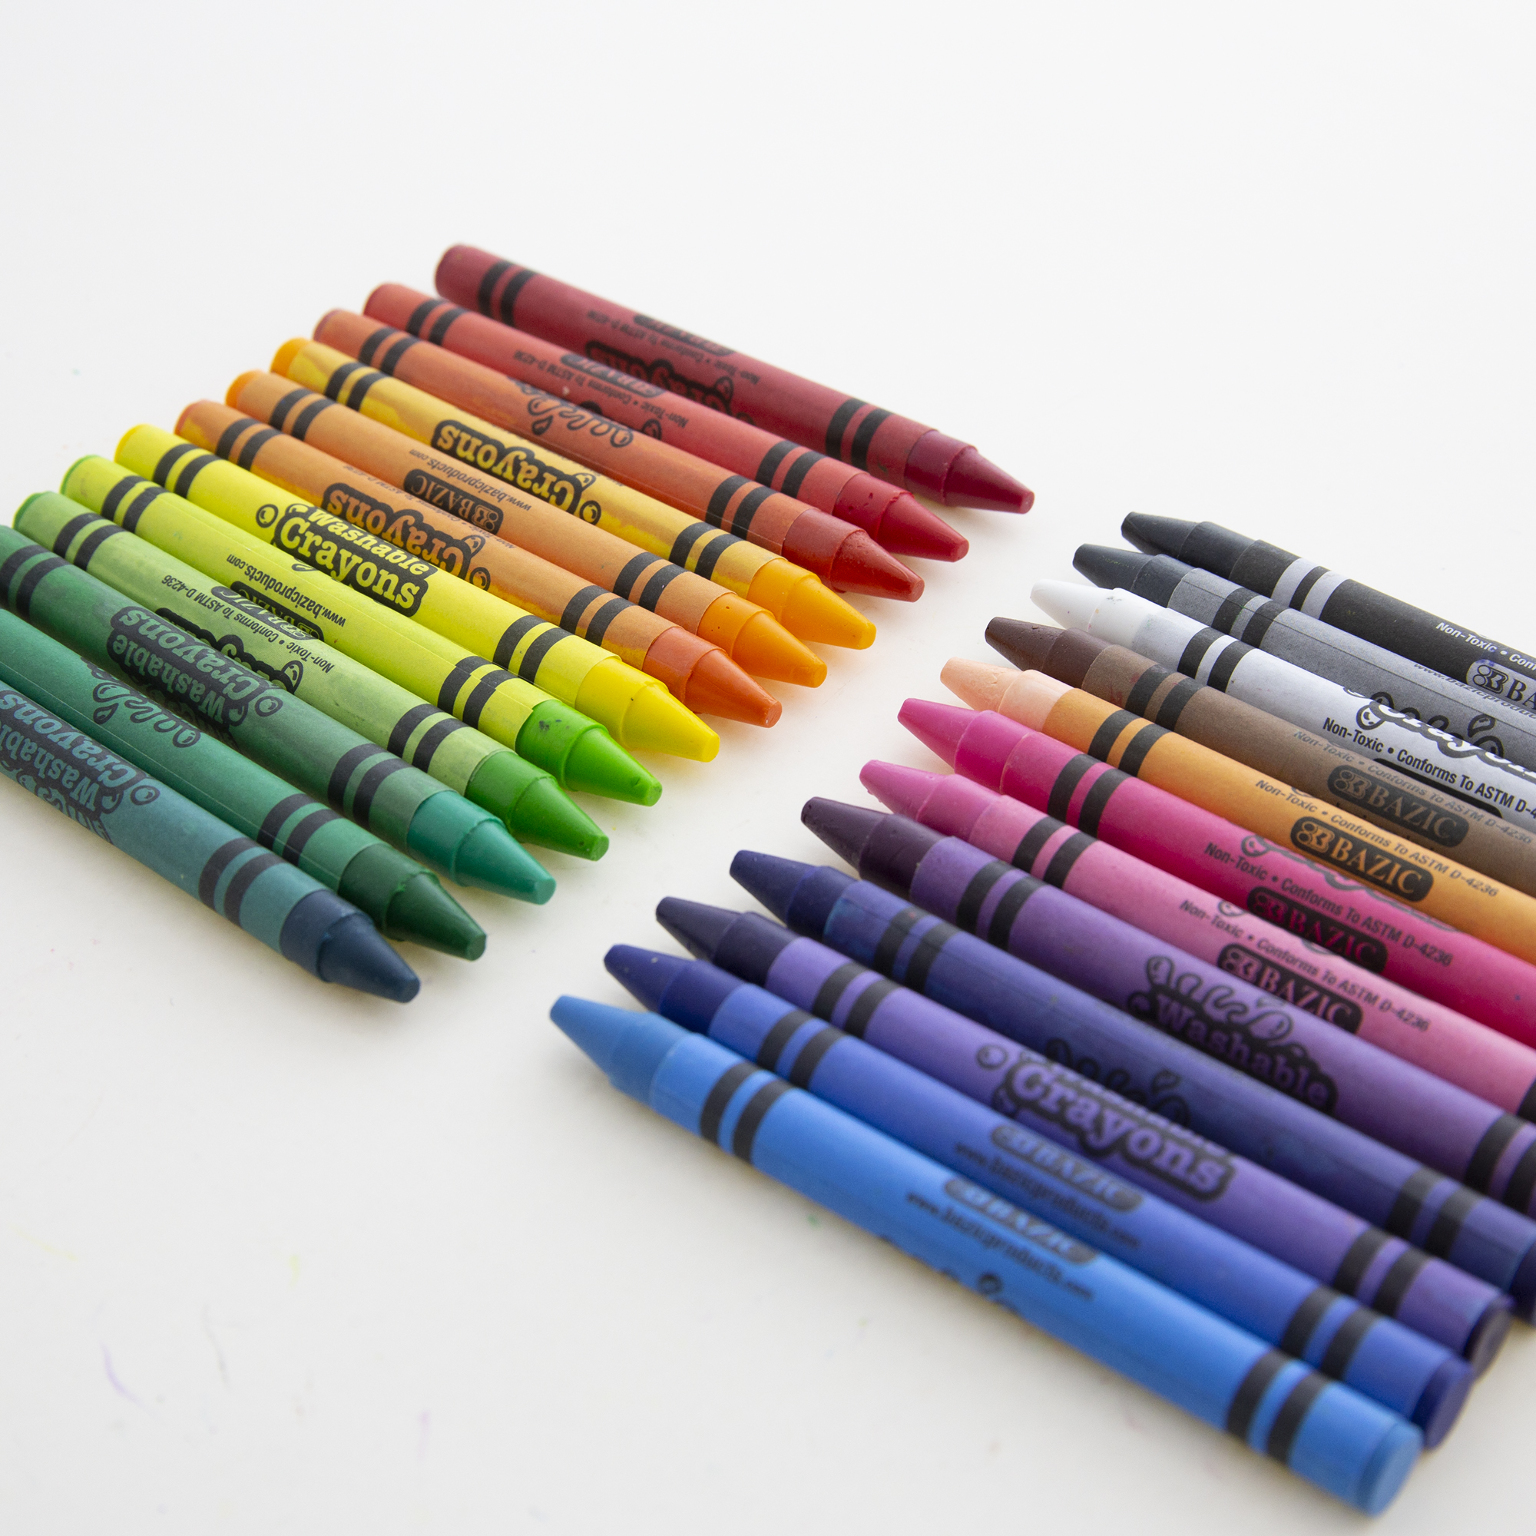 Wholesale Crayola Crayons - 24 Count, Assorted Colors - DollarDays